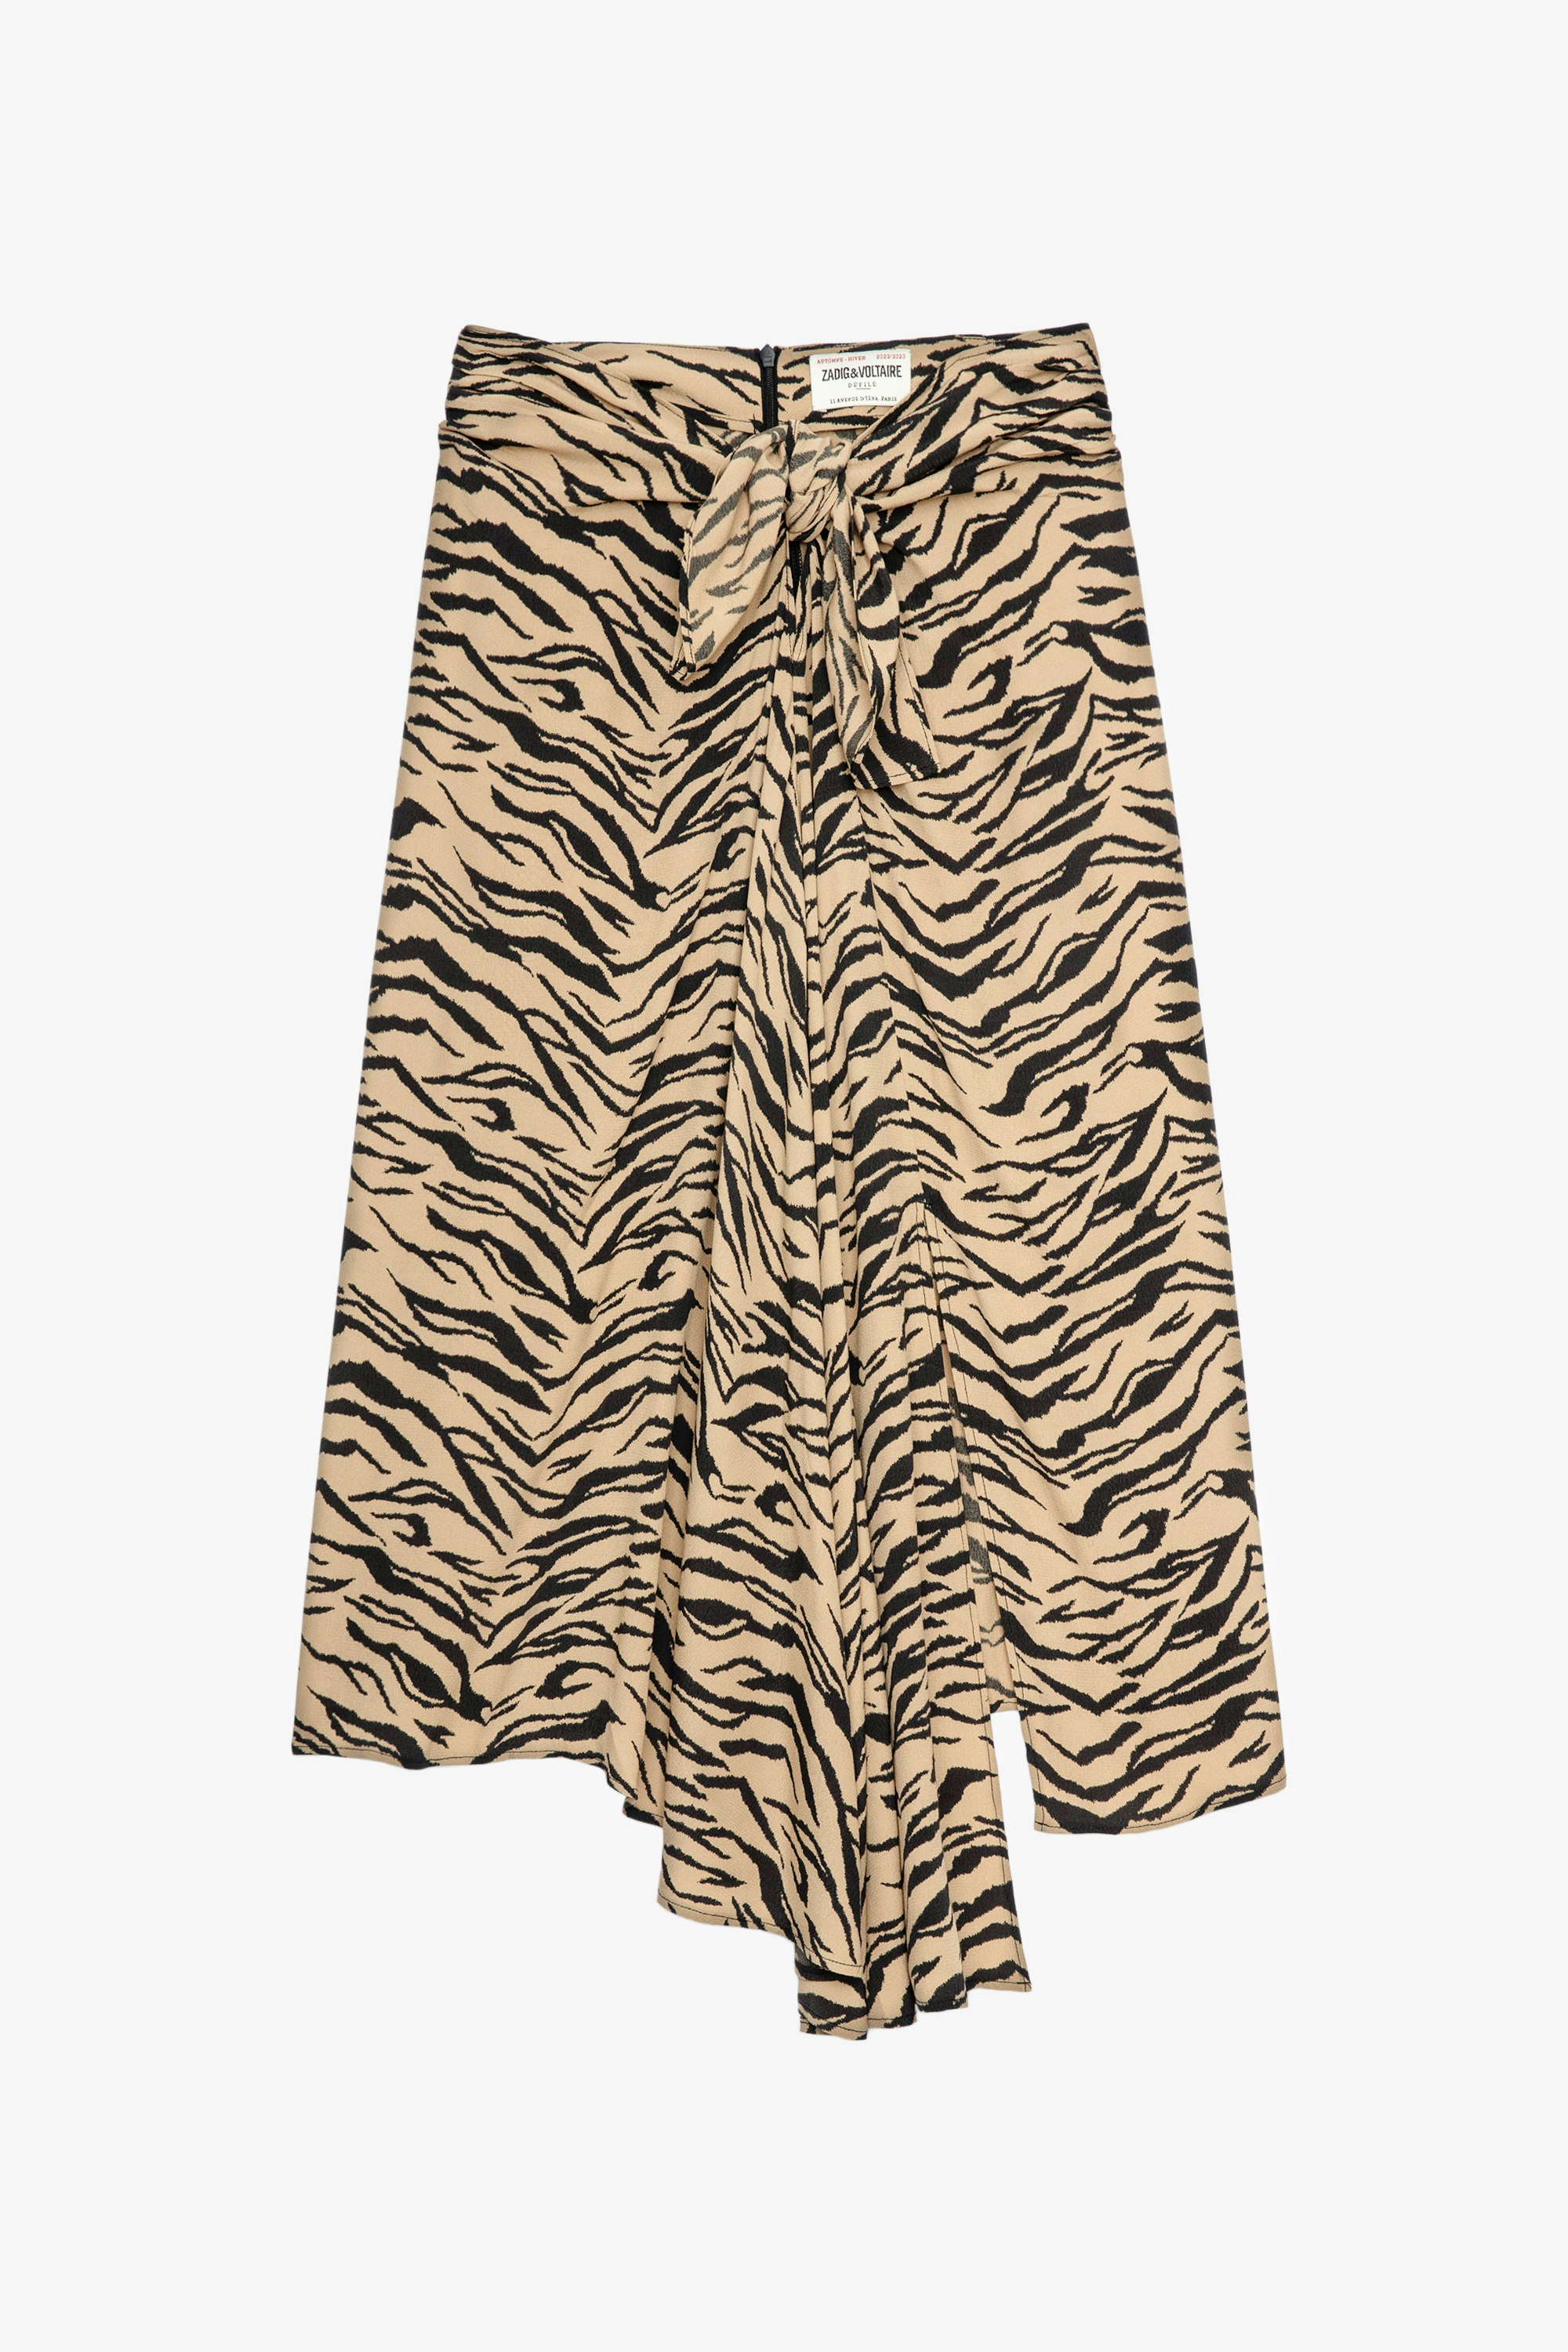 Janais Tiger Skirt Women's Naturel tied midi skirt with tiger print